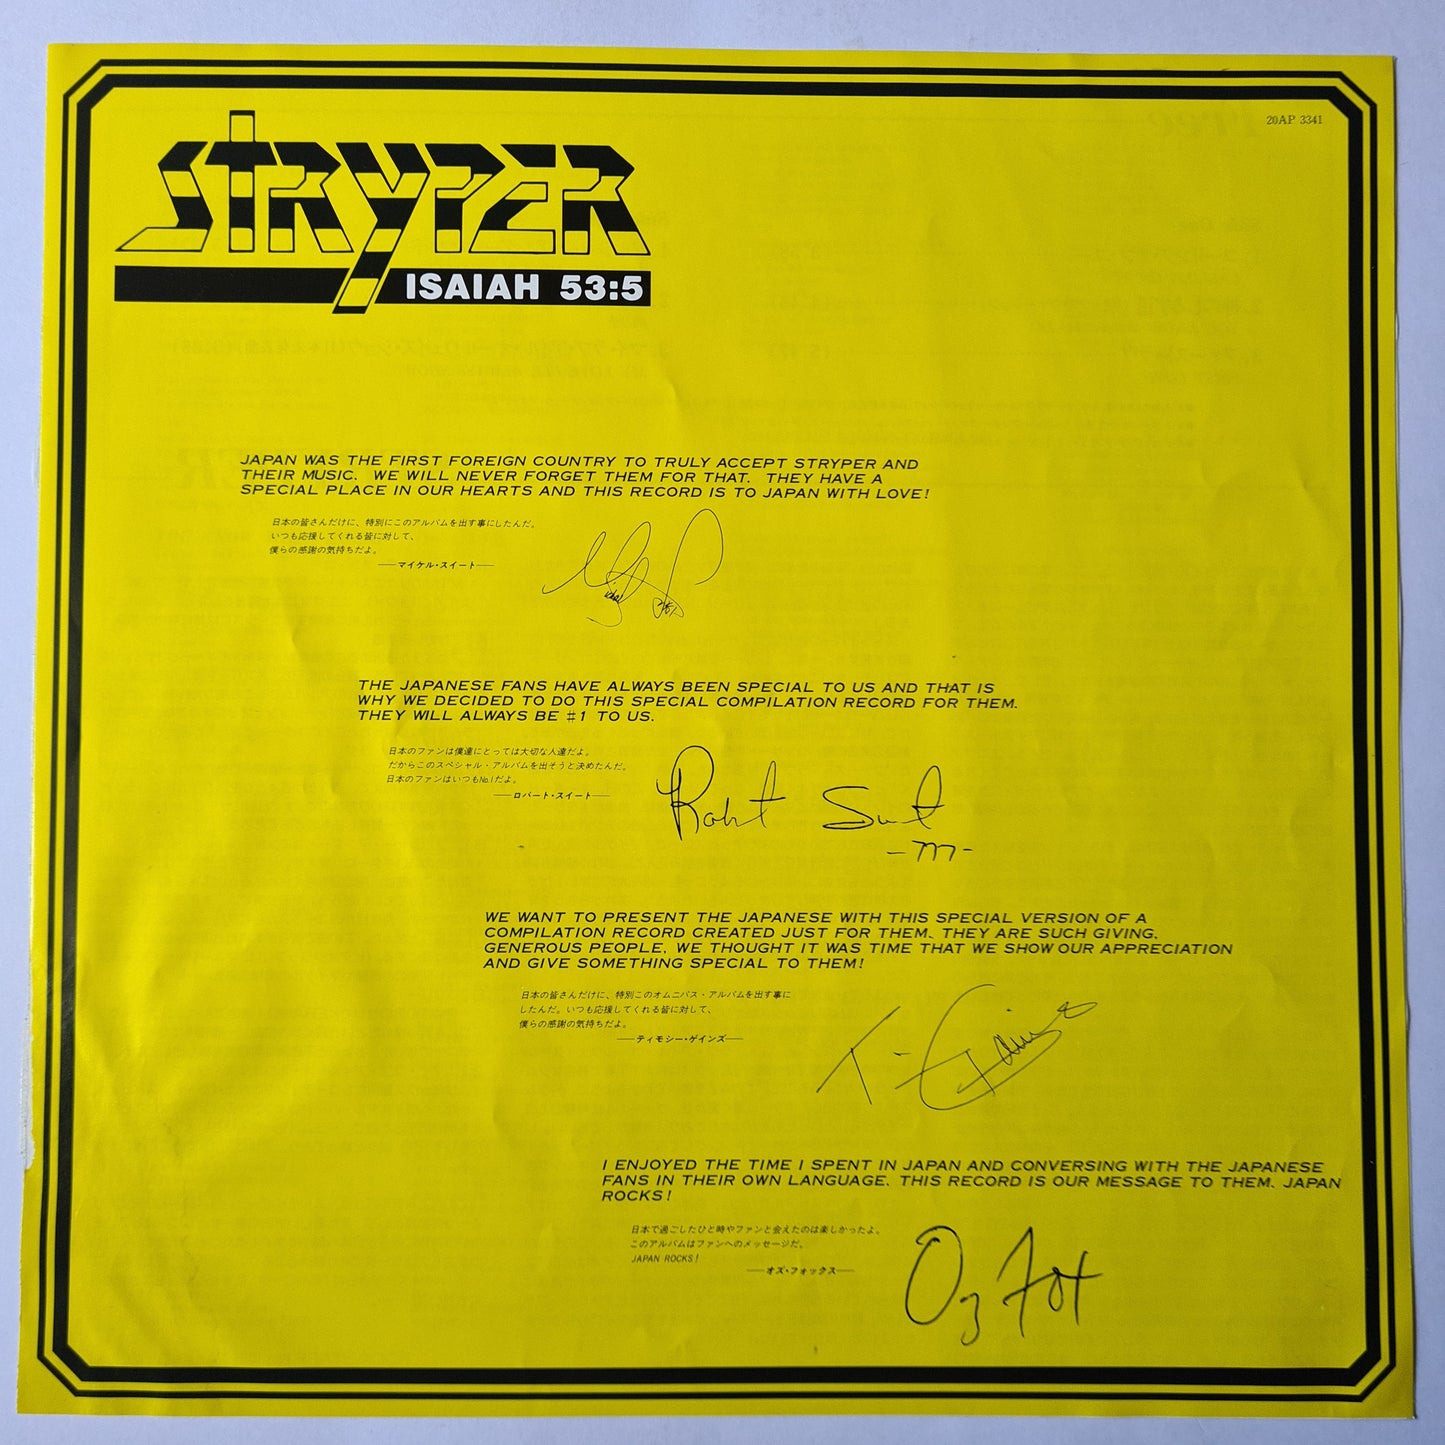 Stryper – Free (Compilation) - 1987 - Vinyl Record